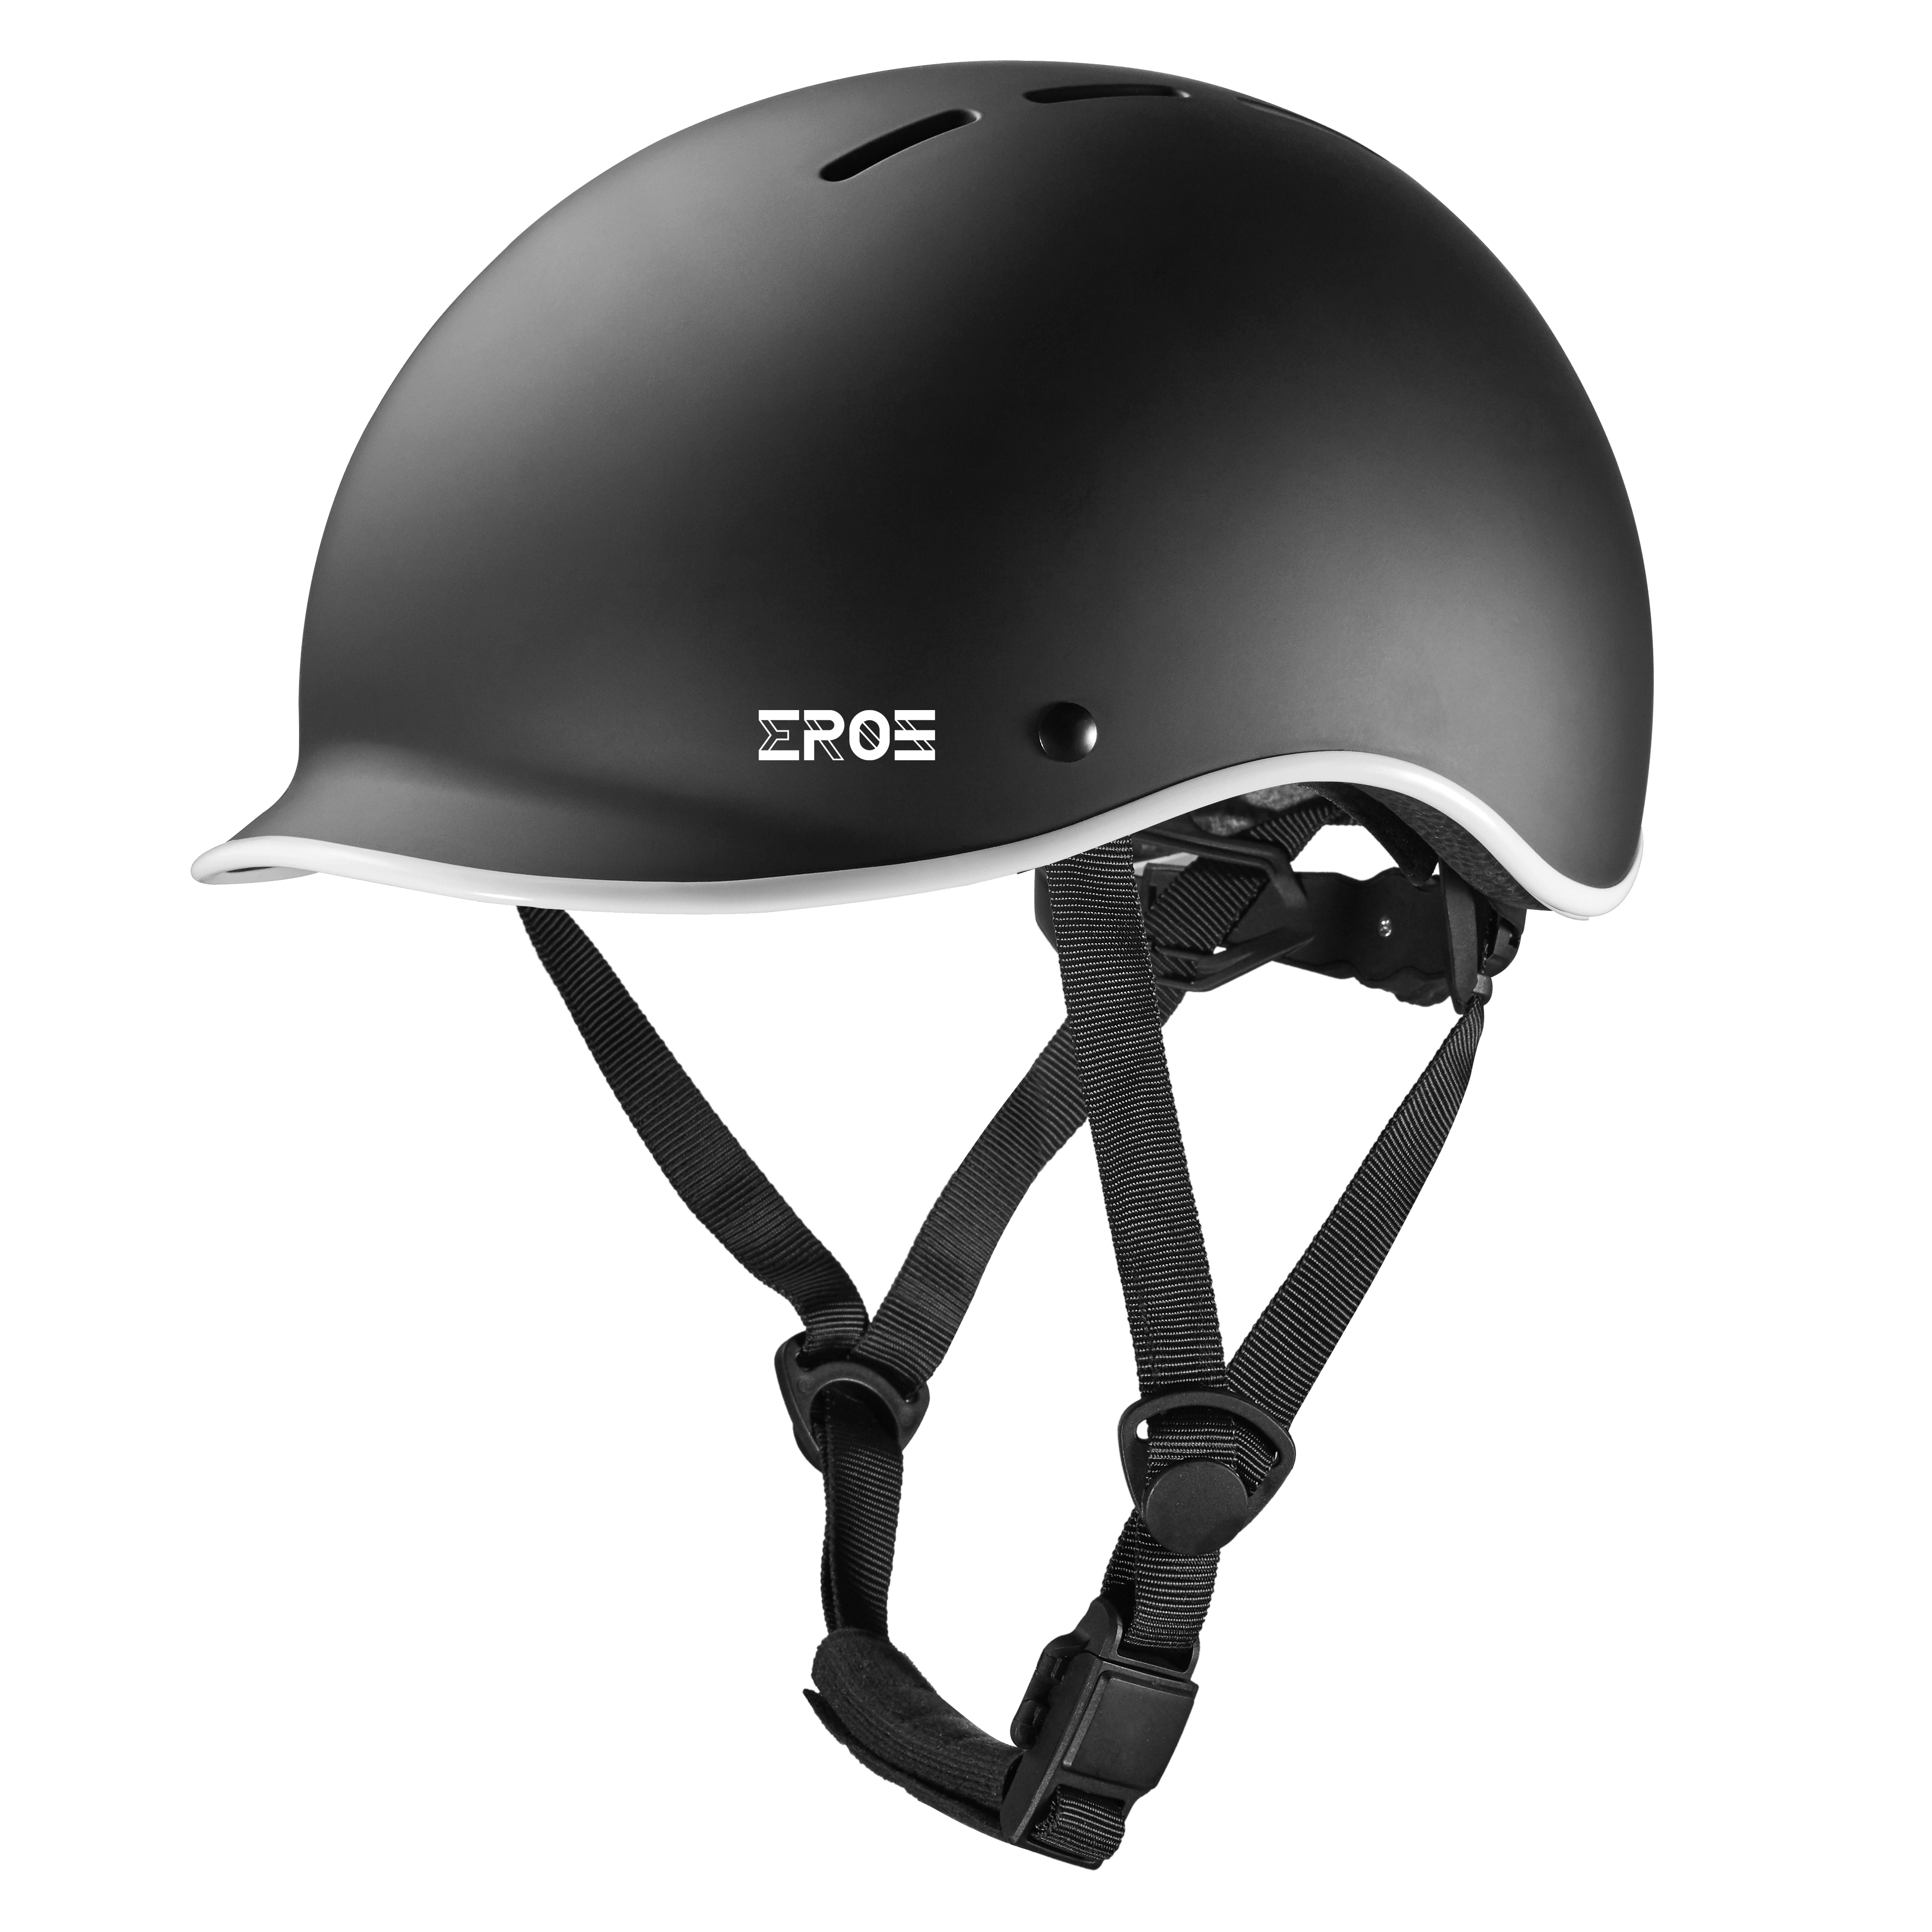 Eroz Vintage Collection Helmet for Electric Scooter and Bike (Blue/Black)